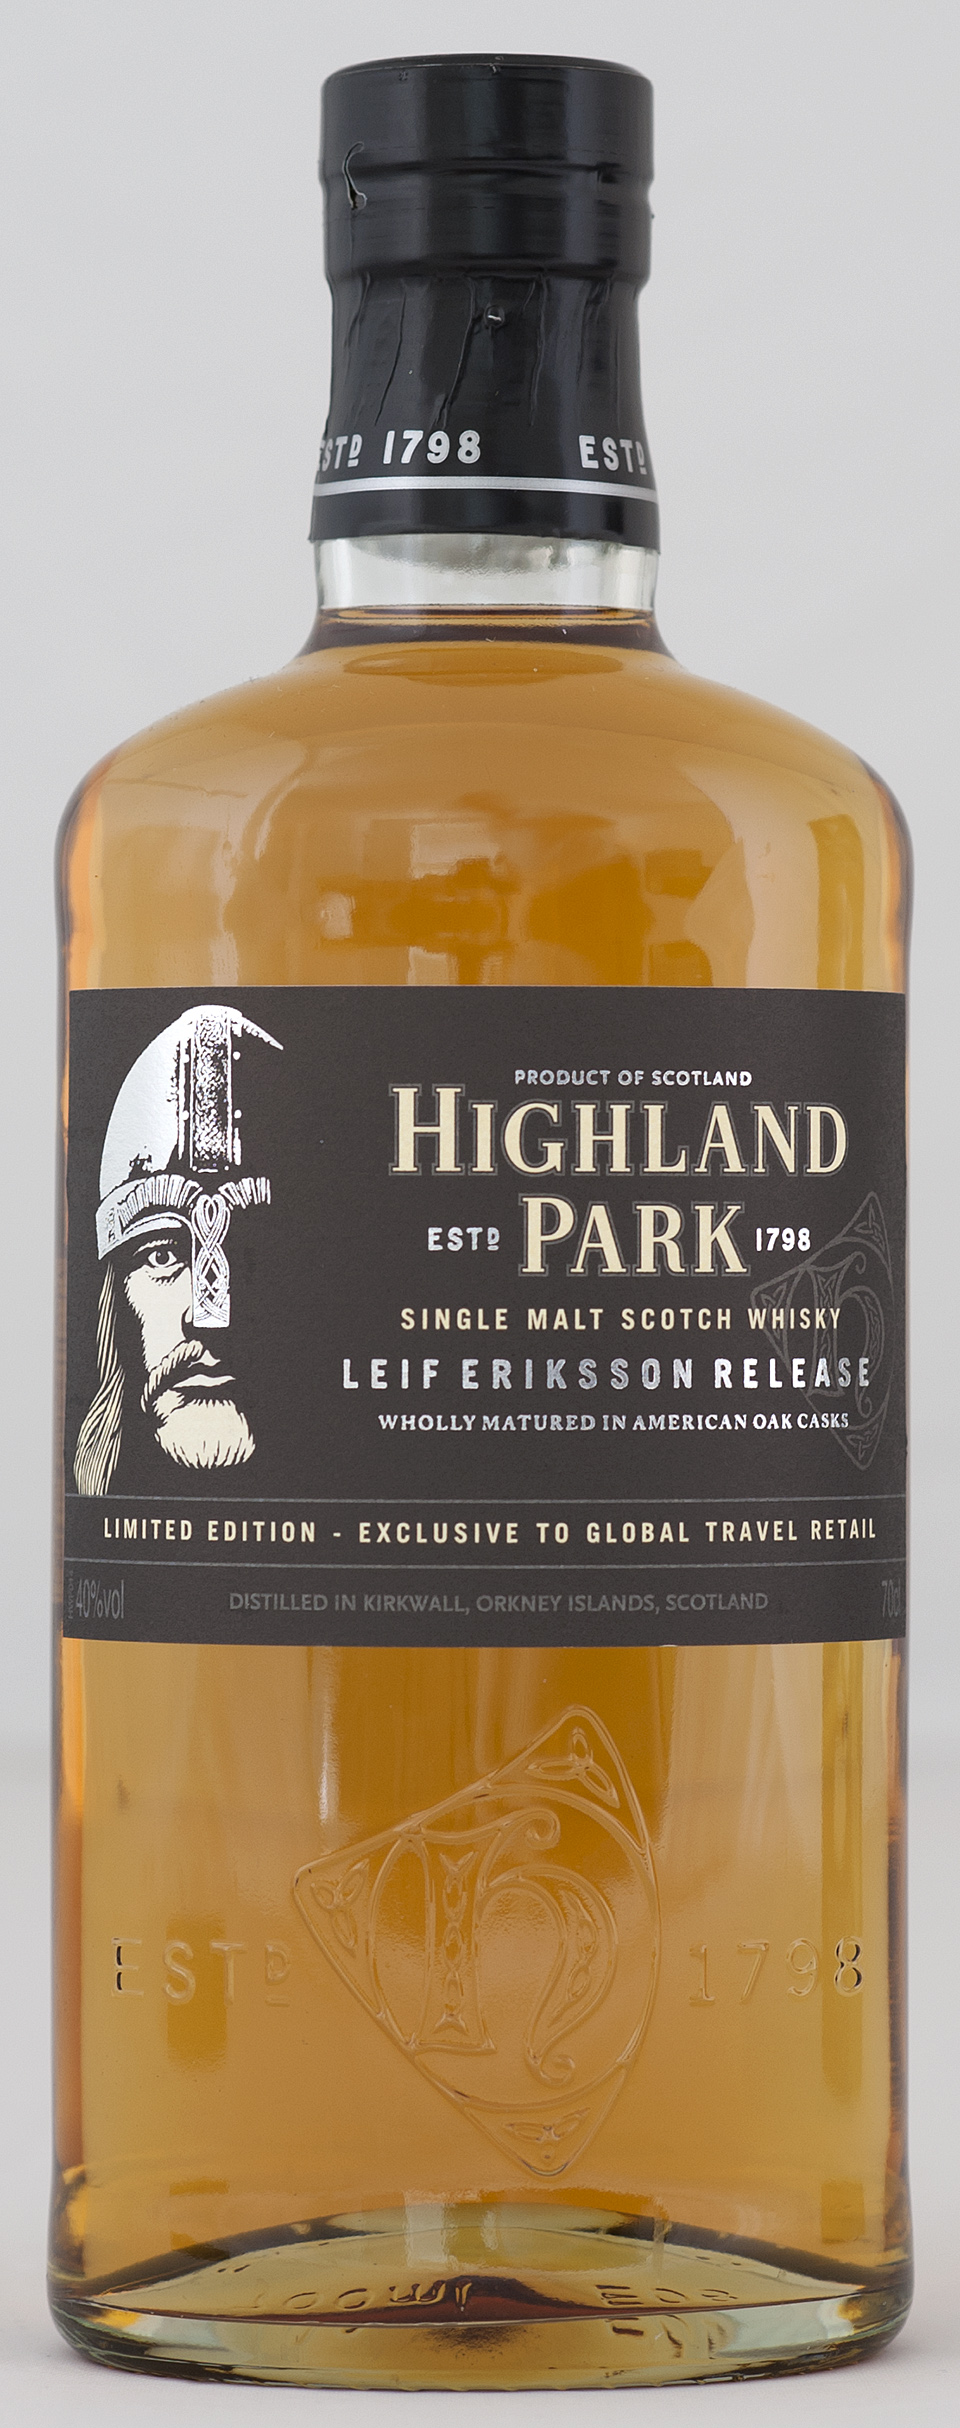 Billede: _DSC5625 Highland Park - Leif Eriksson release - bottle.jpg